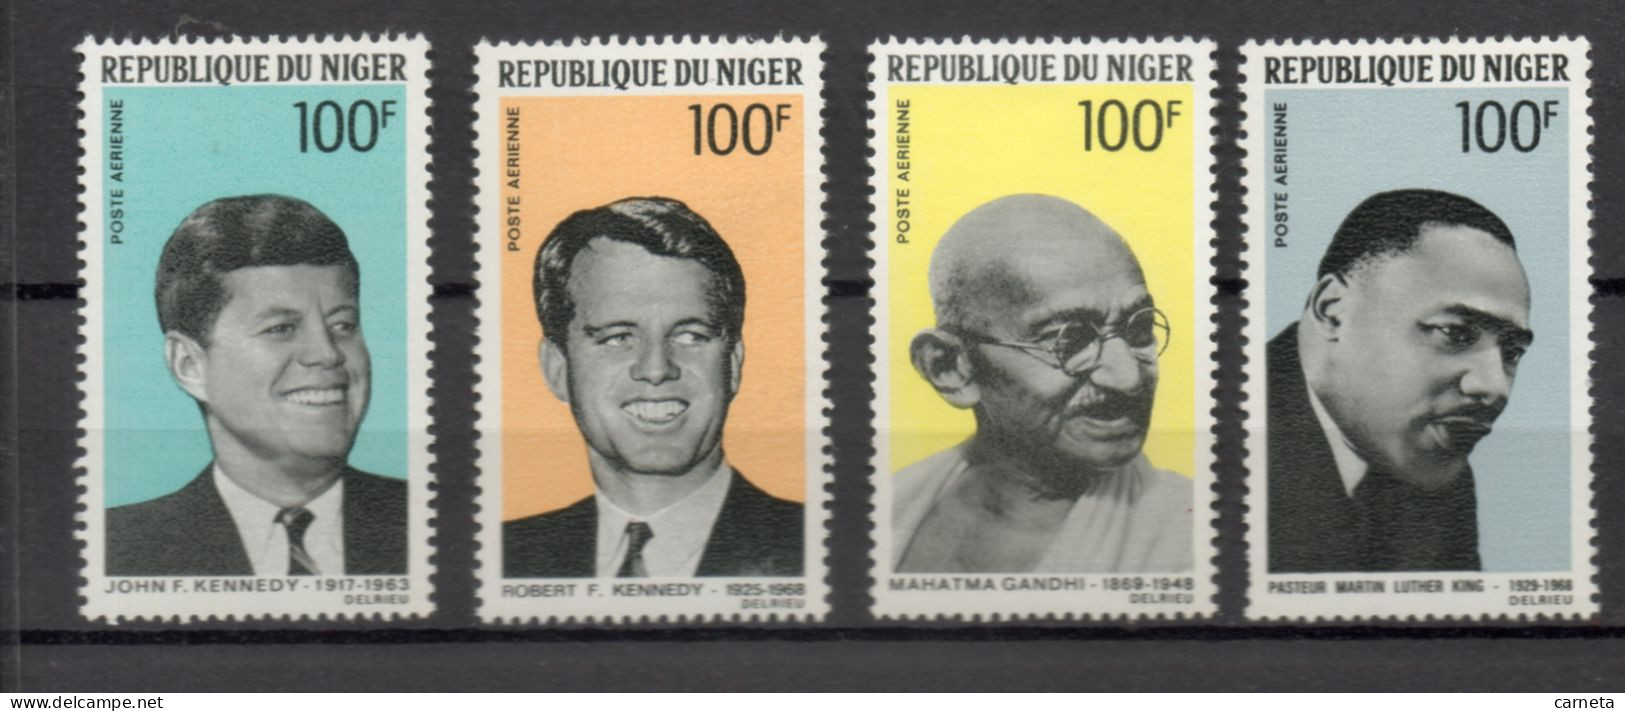 NIGER  PA  N° 94 à 97     NEUFS SANS CHARNIERE  COTE 7.00€   GANDHI KENNEDY LUTHER KING  VOIR DESCIPTION - Niger (1960-...)